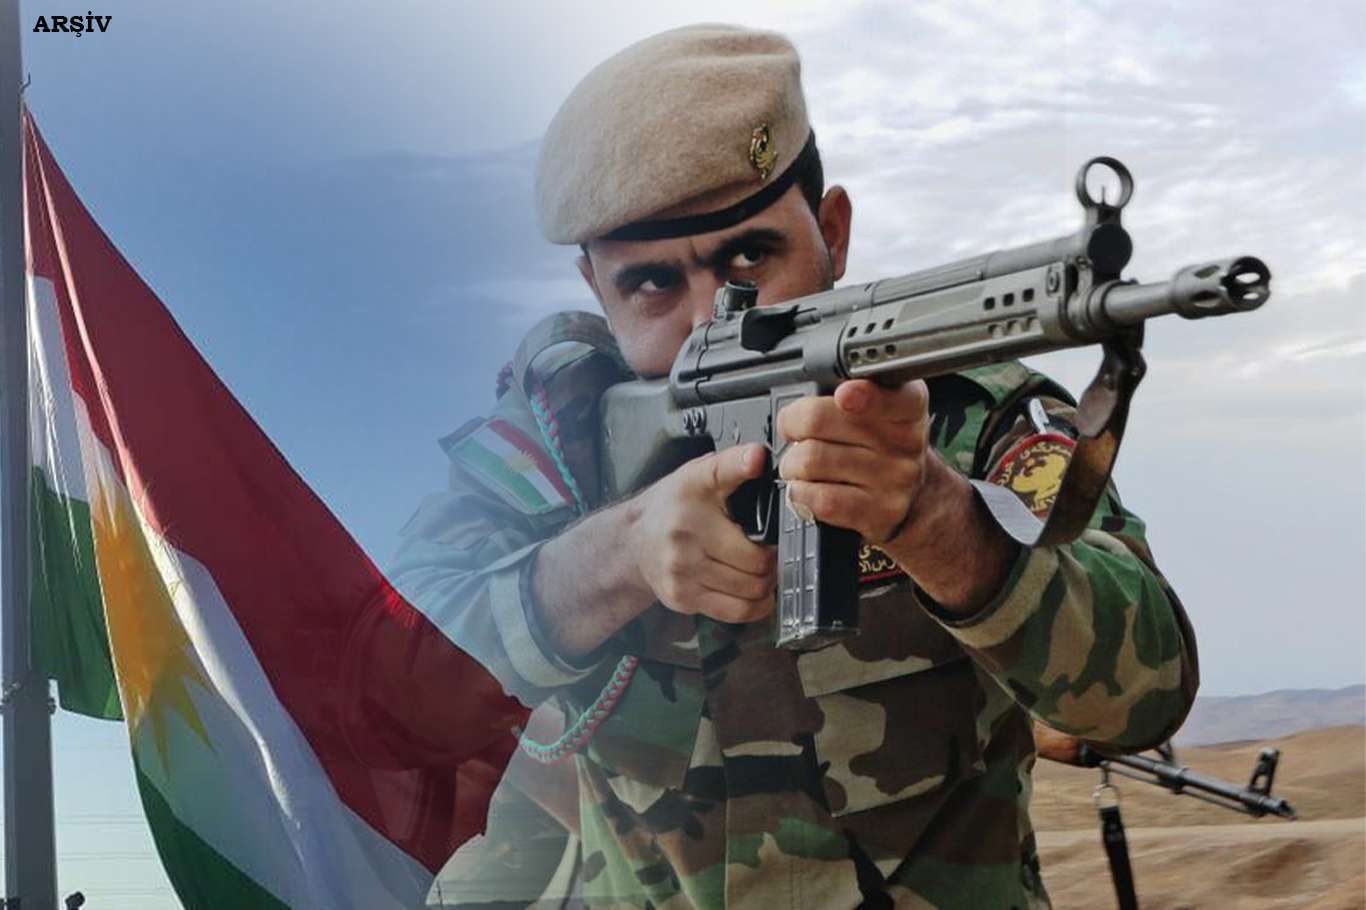 PKK members kill 5 Peshmergas in Kurdistan region